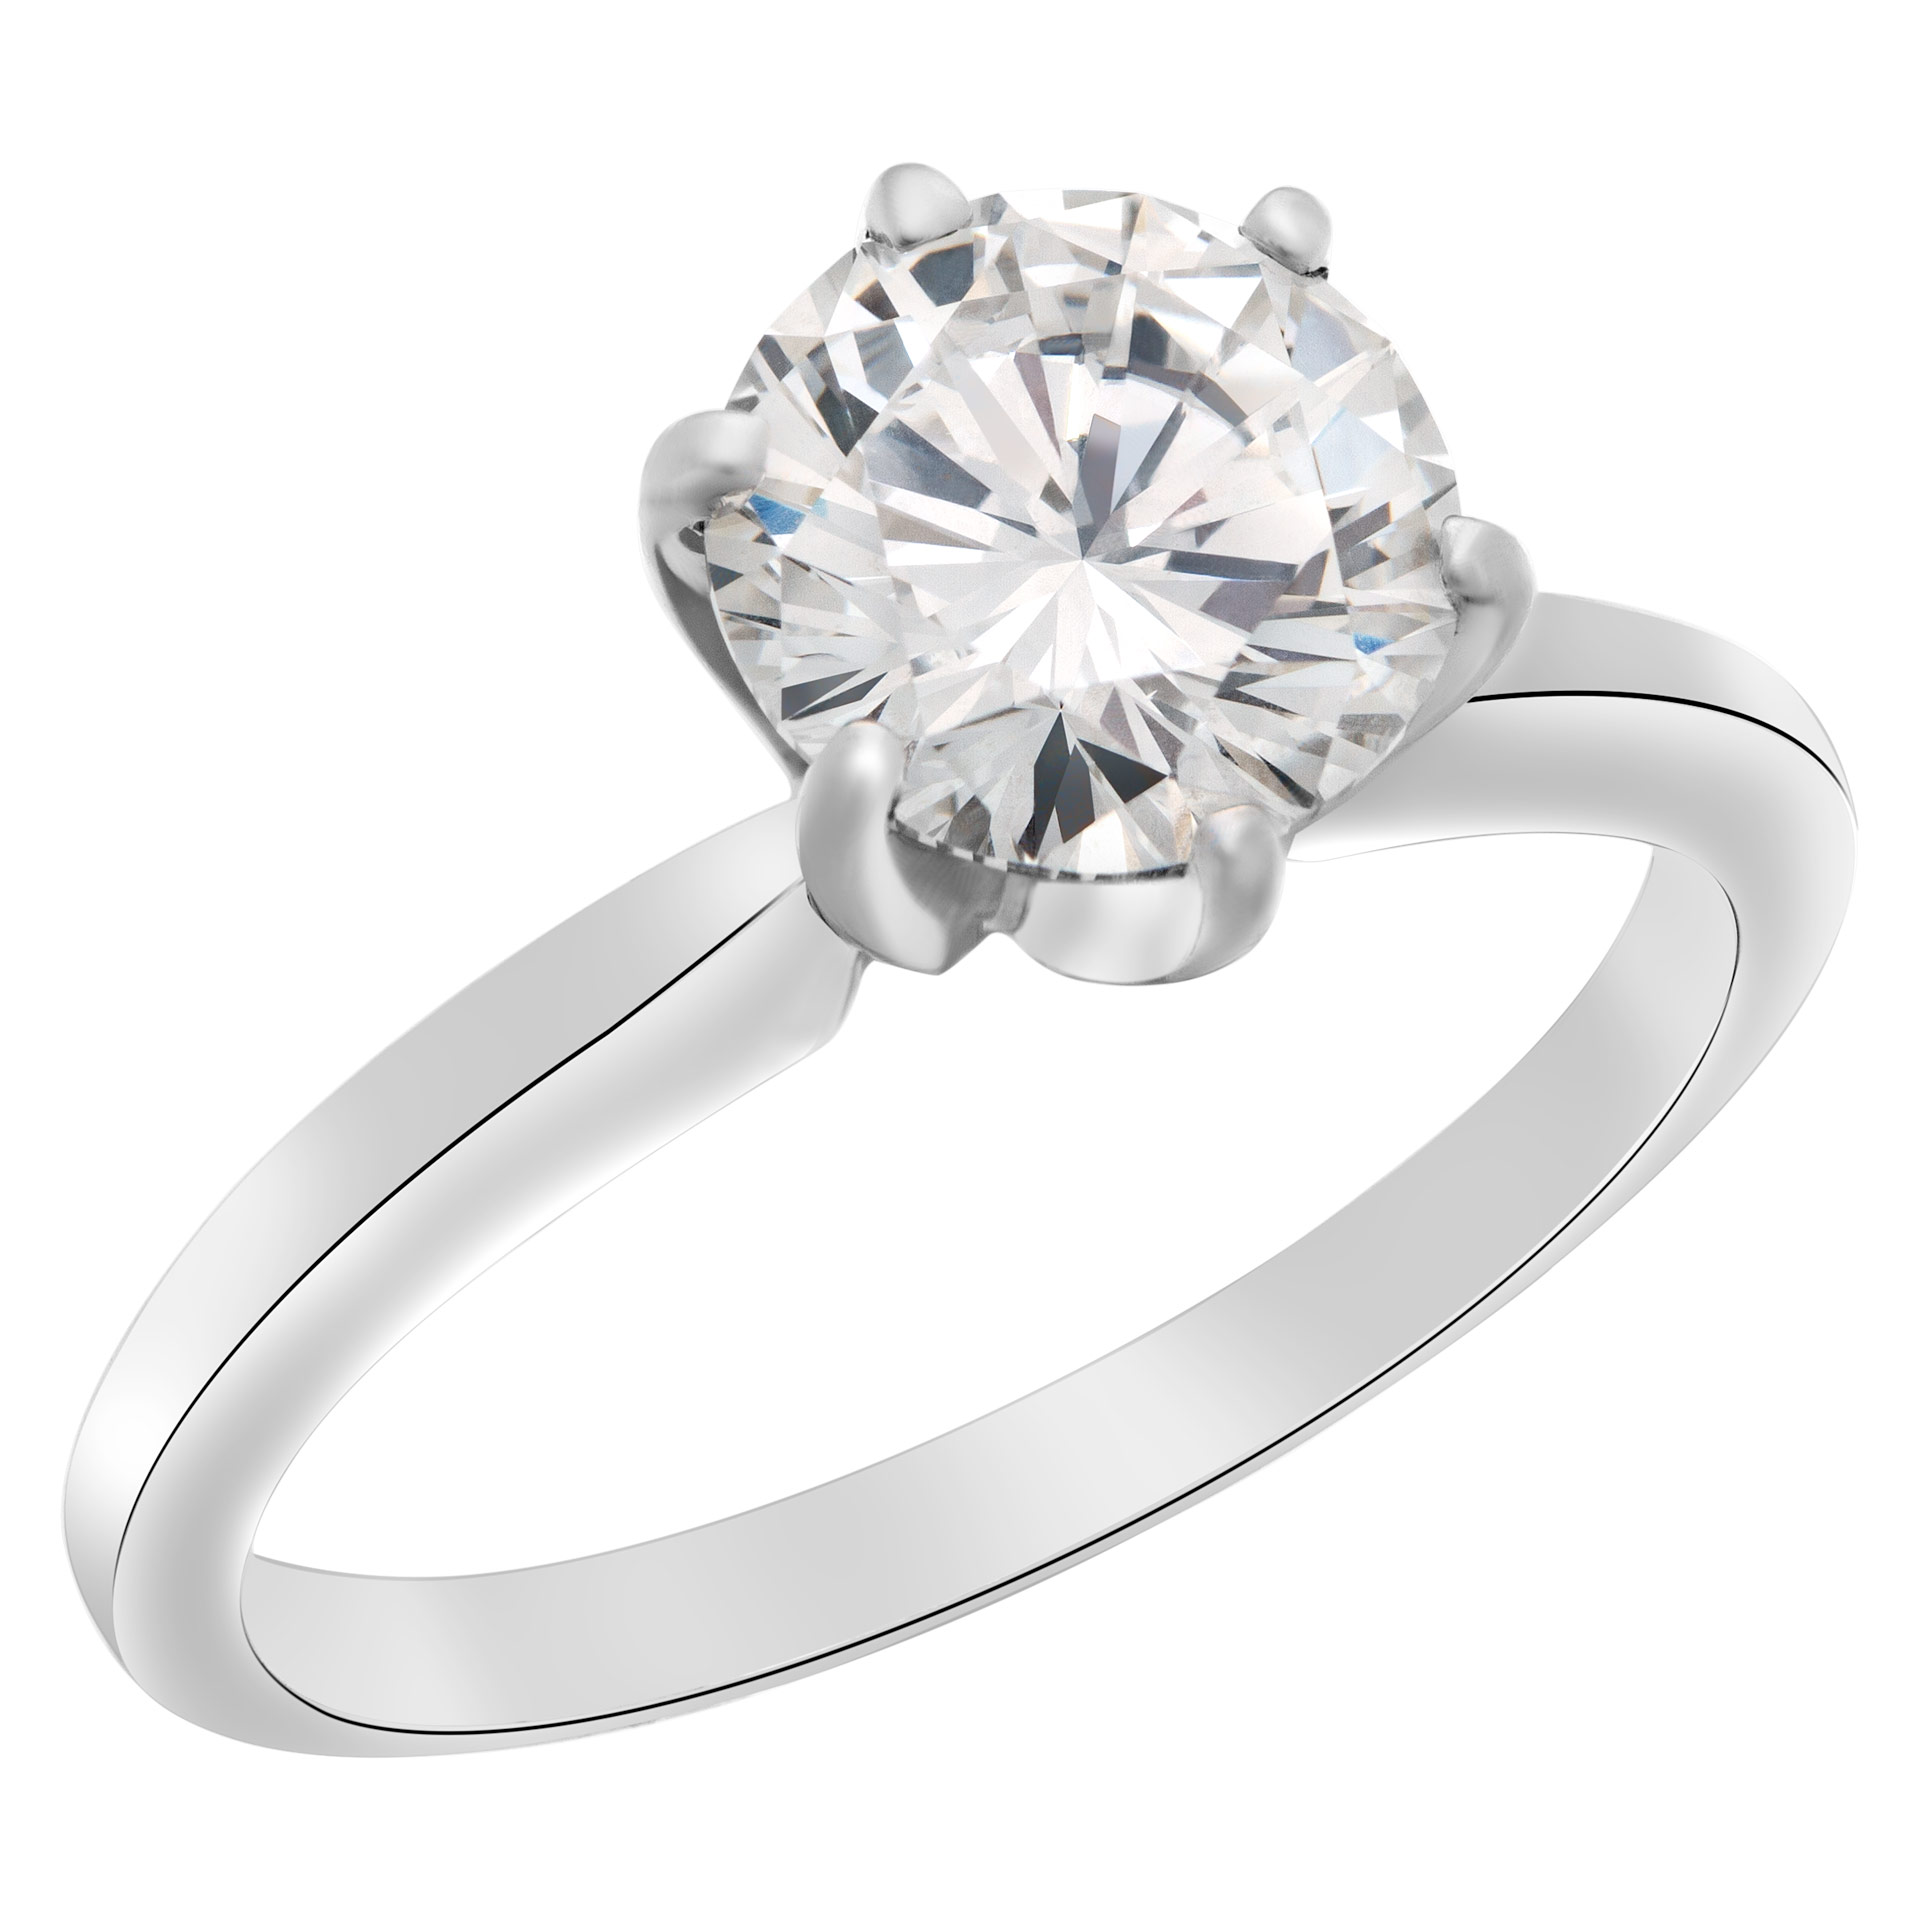 GIA Certified round brilliant cut diamond ring 1.51 carat (E color, VS2 clarity) solitaire ring in platinum image 2